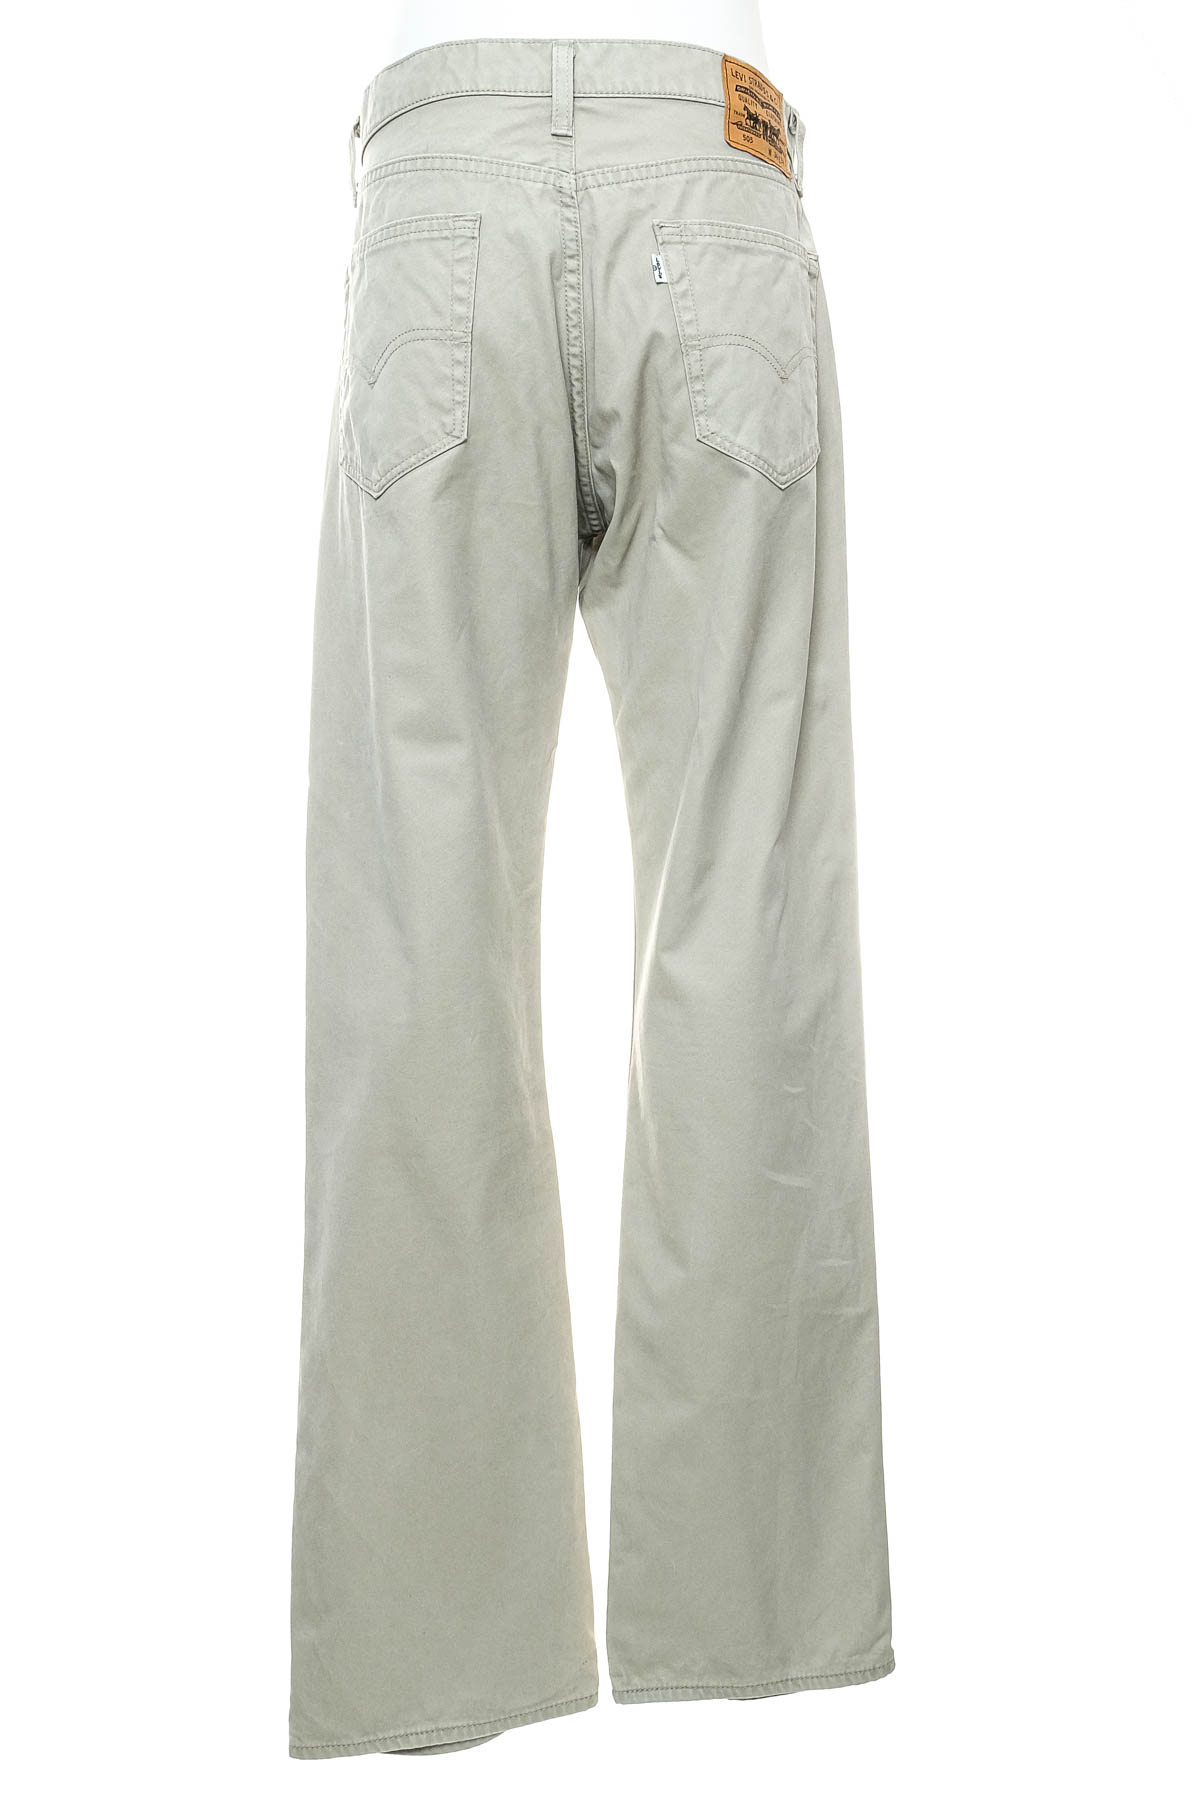 Men's trousers - Levi Strauss & Co. - 1